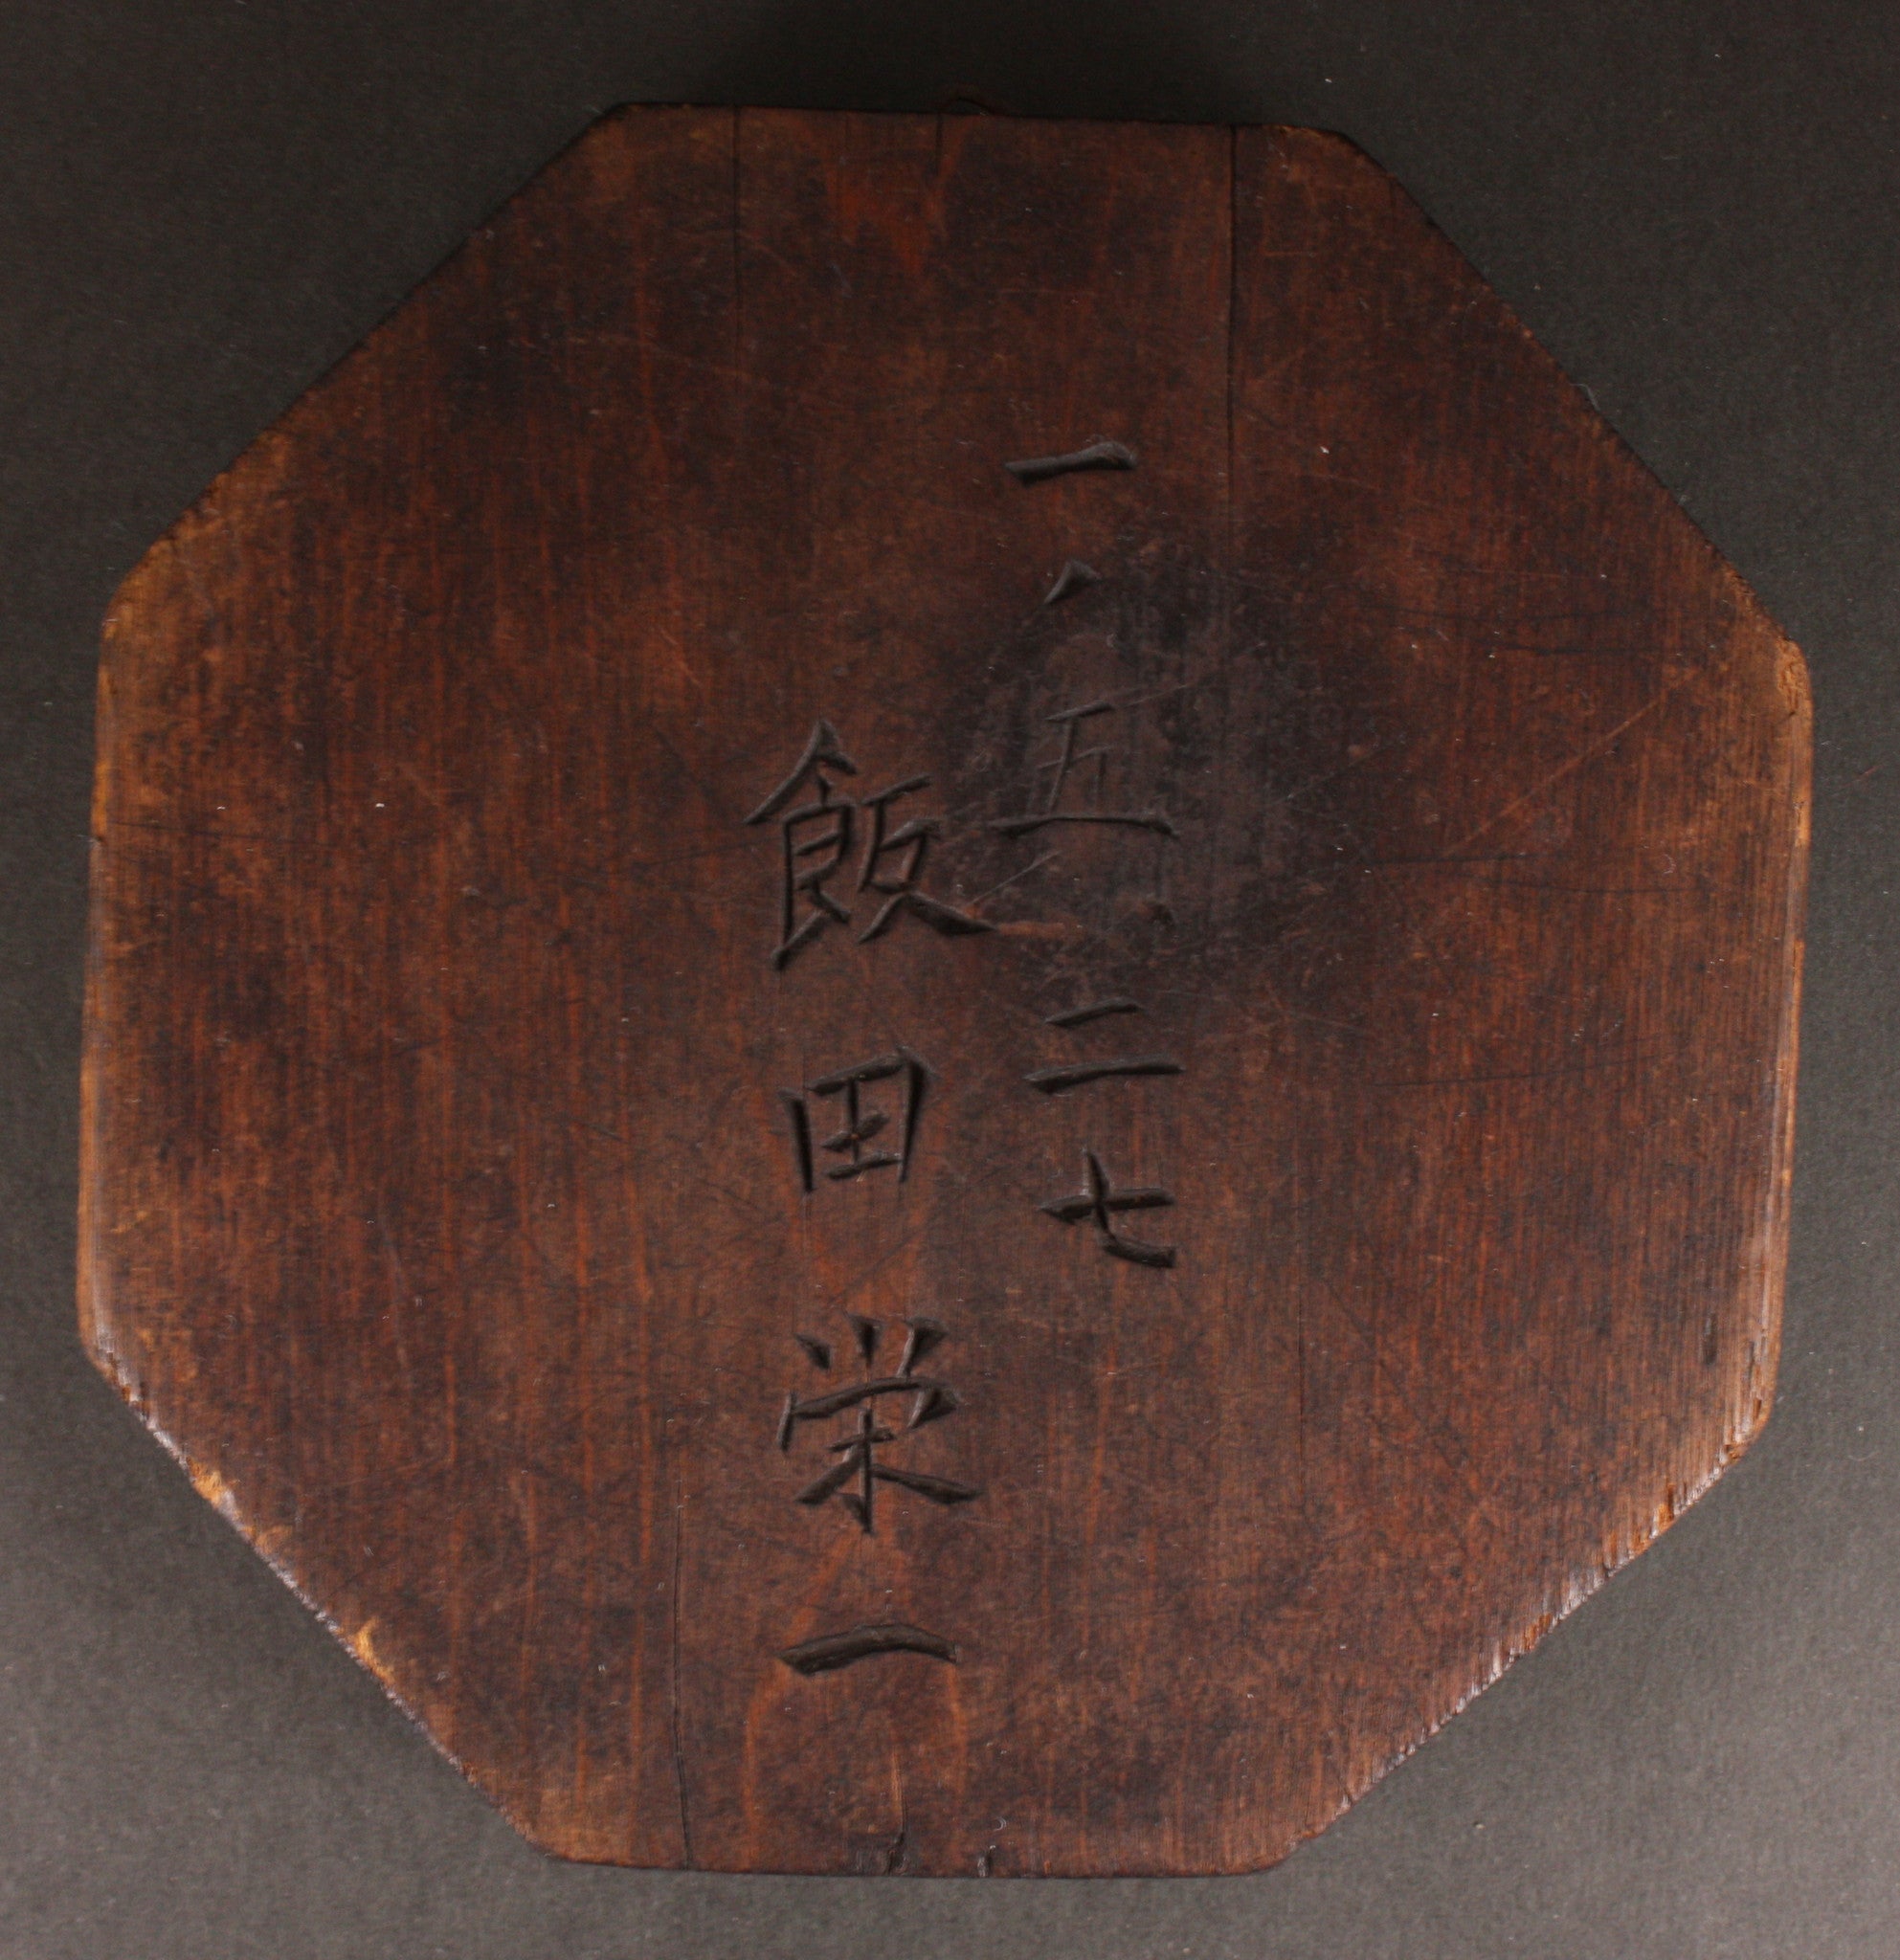 Antique Japanese Military Wood Carving Helmet Infantry Commemorative Plaque